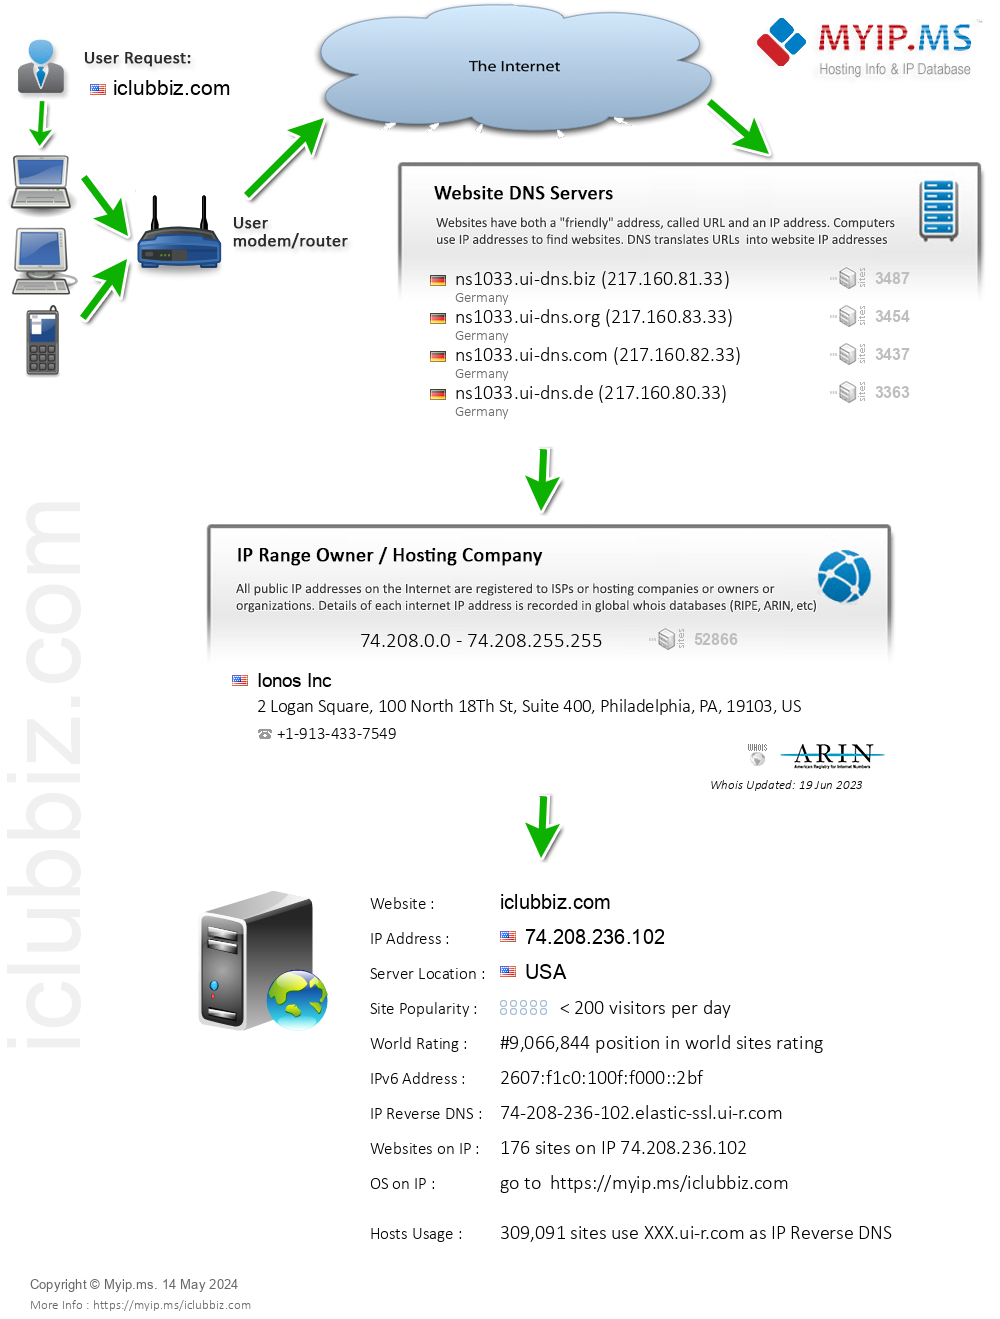 Iclubbiz.com - Website Hosting Visual IP Diagram